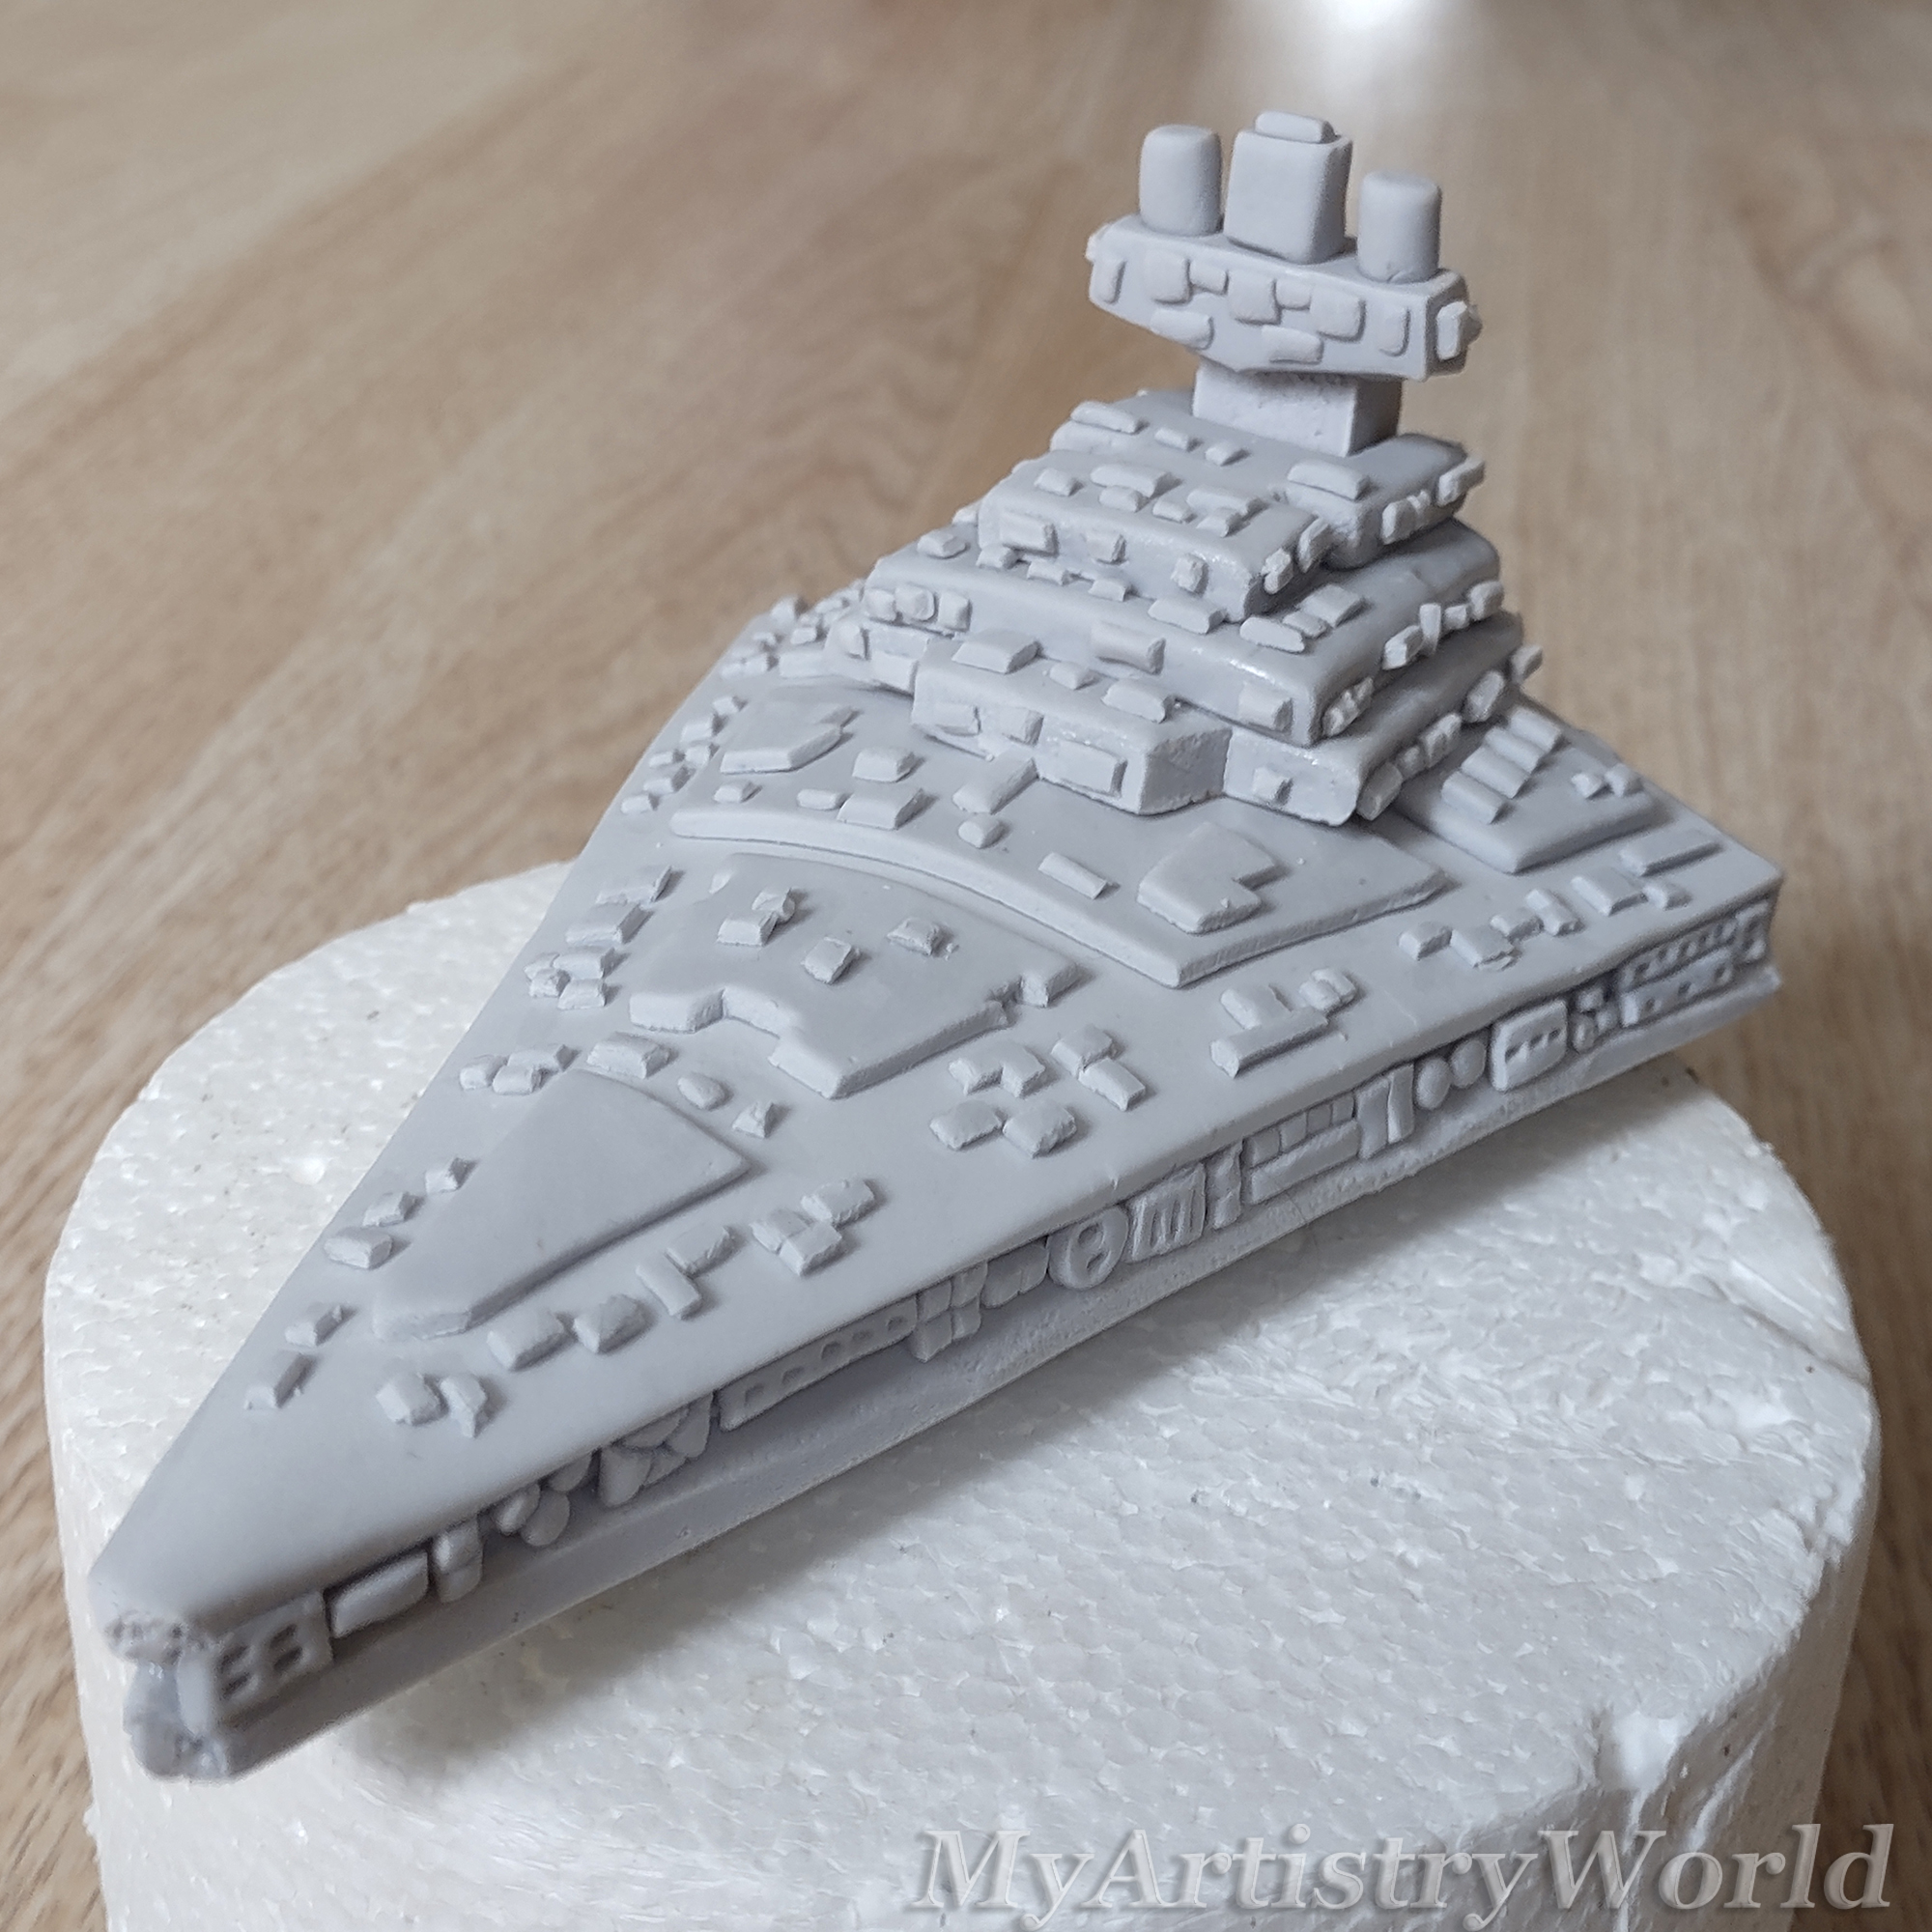 Imperial Star Destroyer cake topper